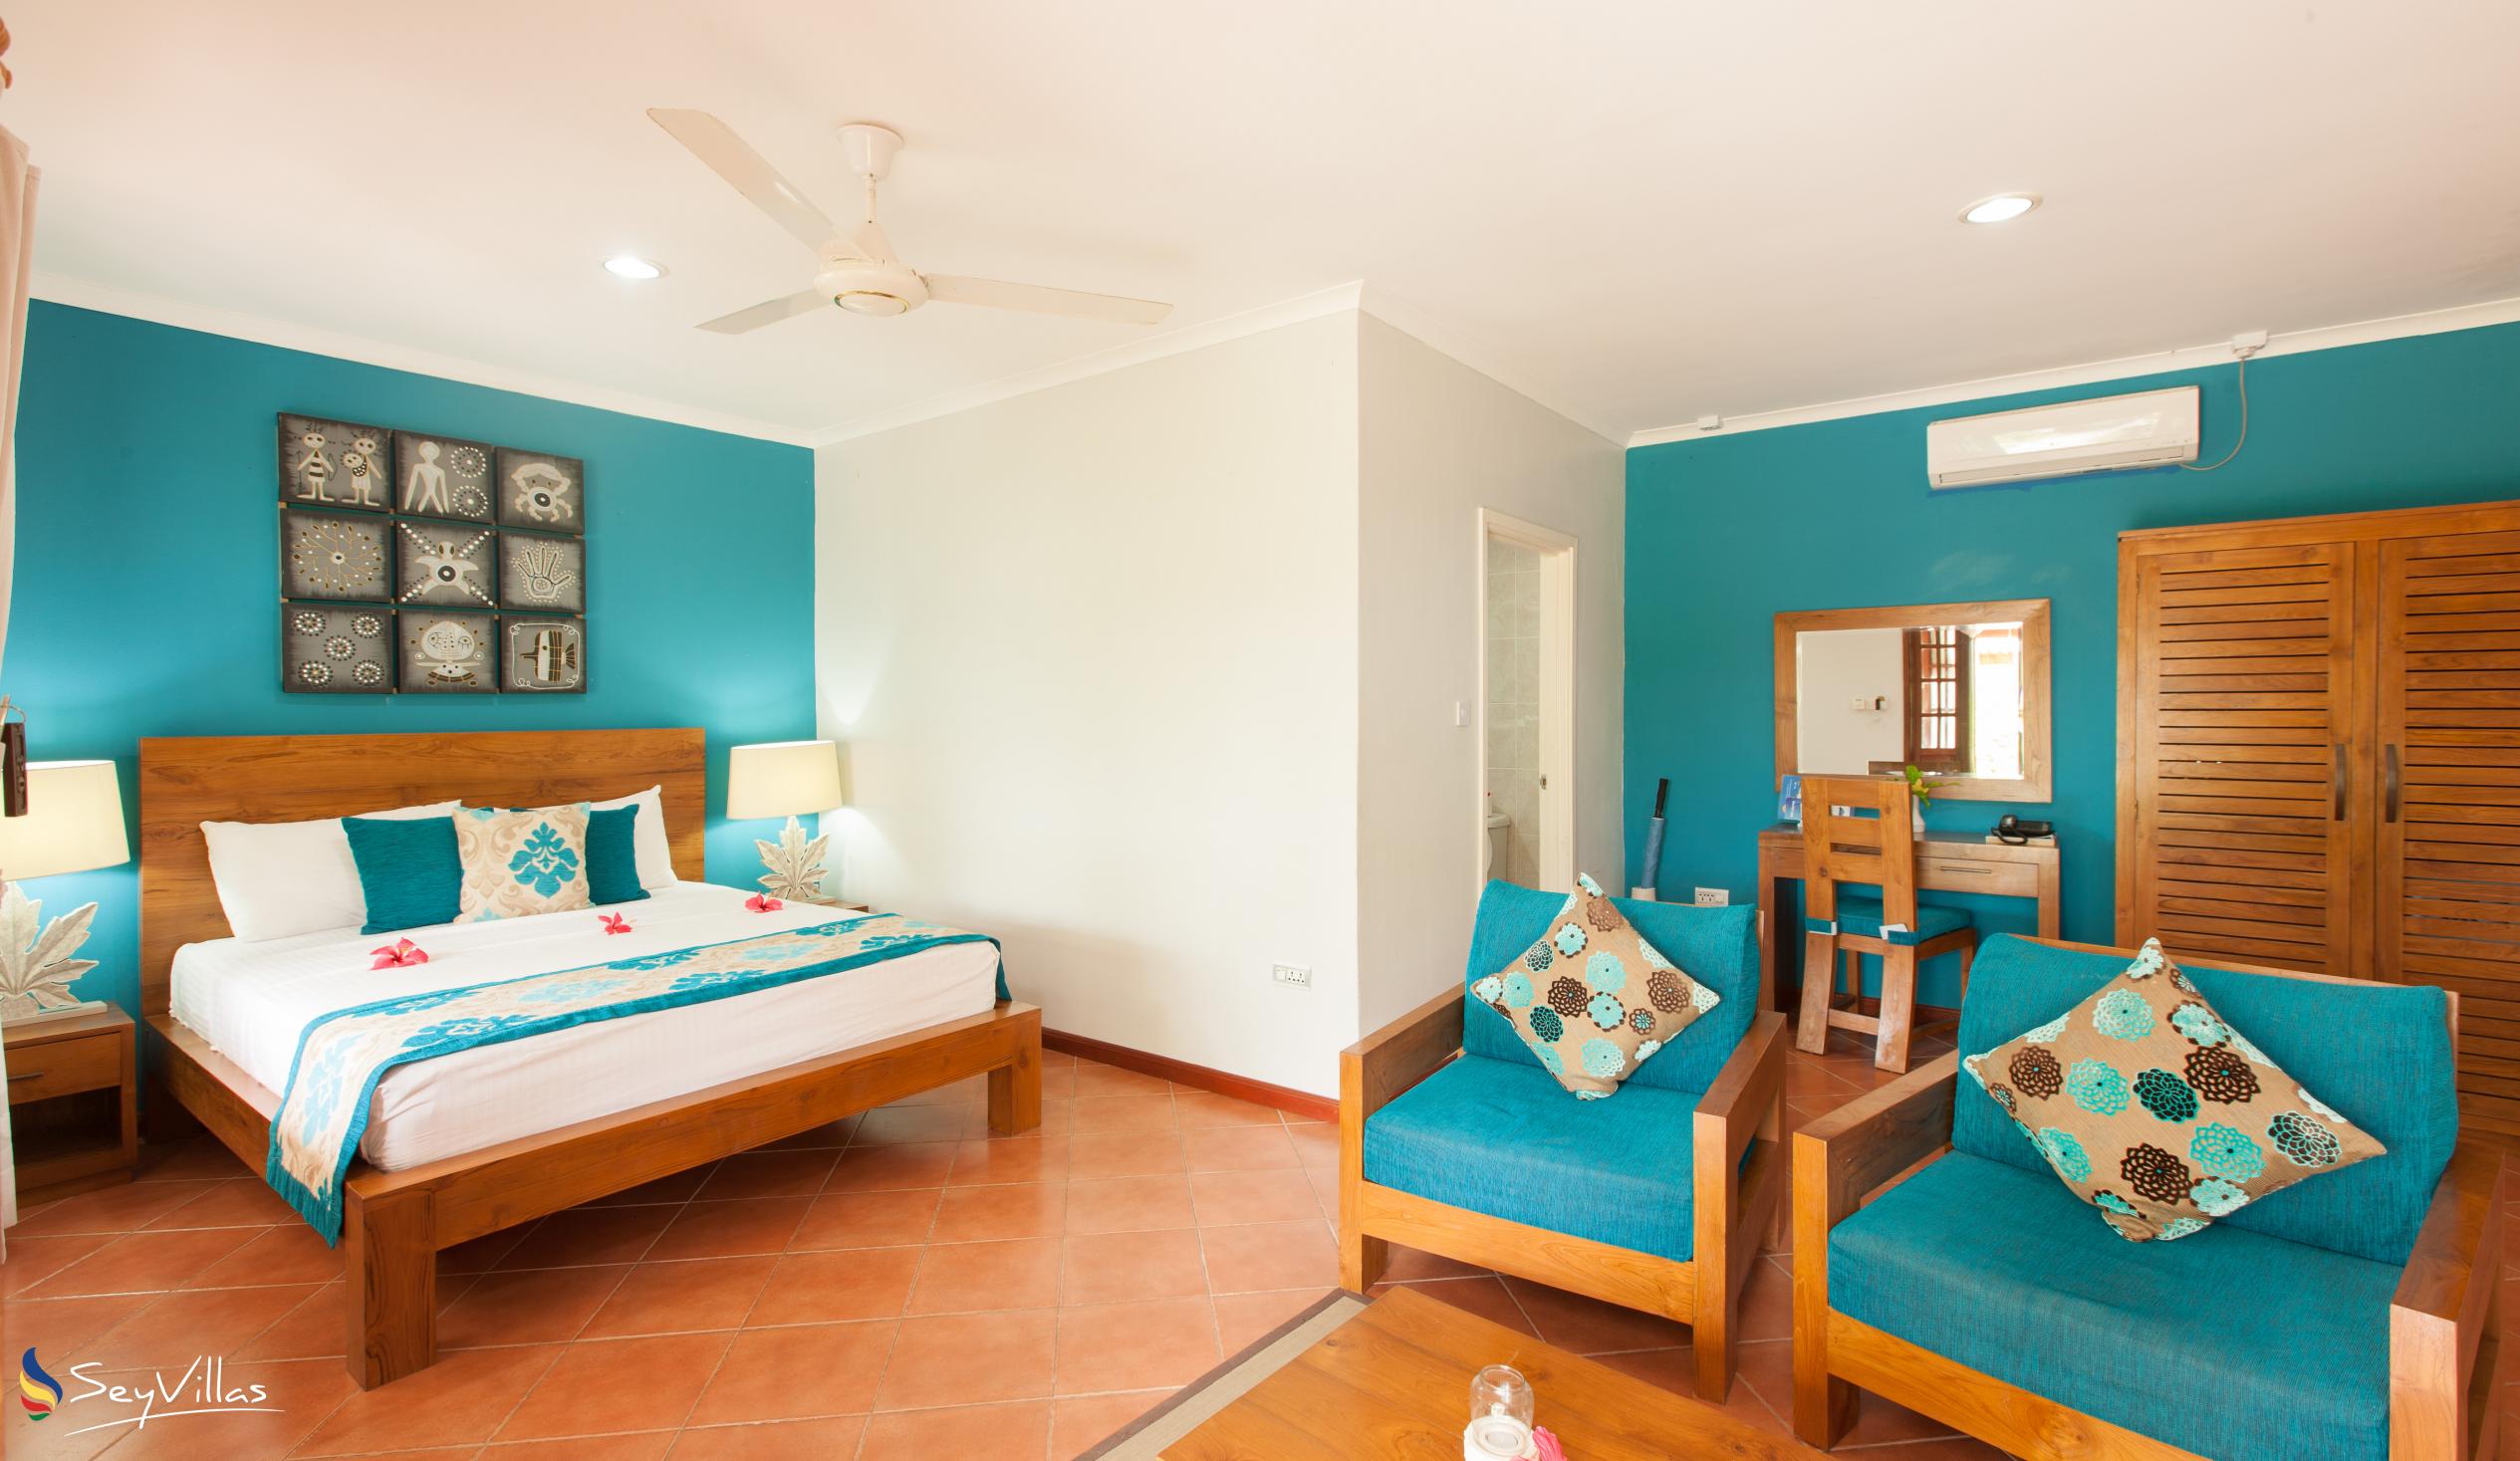 Photo 32: Villas de Mer - Superior Room - Praslin (Seychelles)